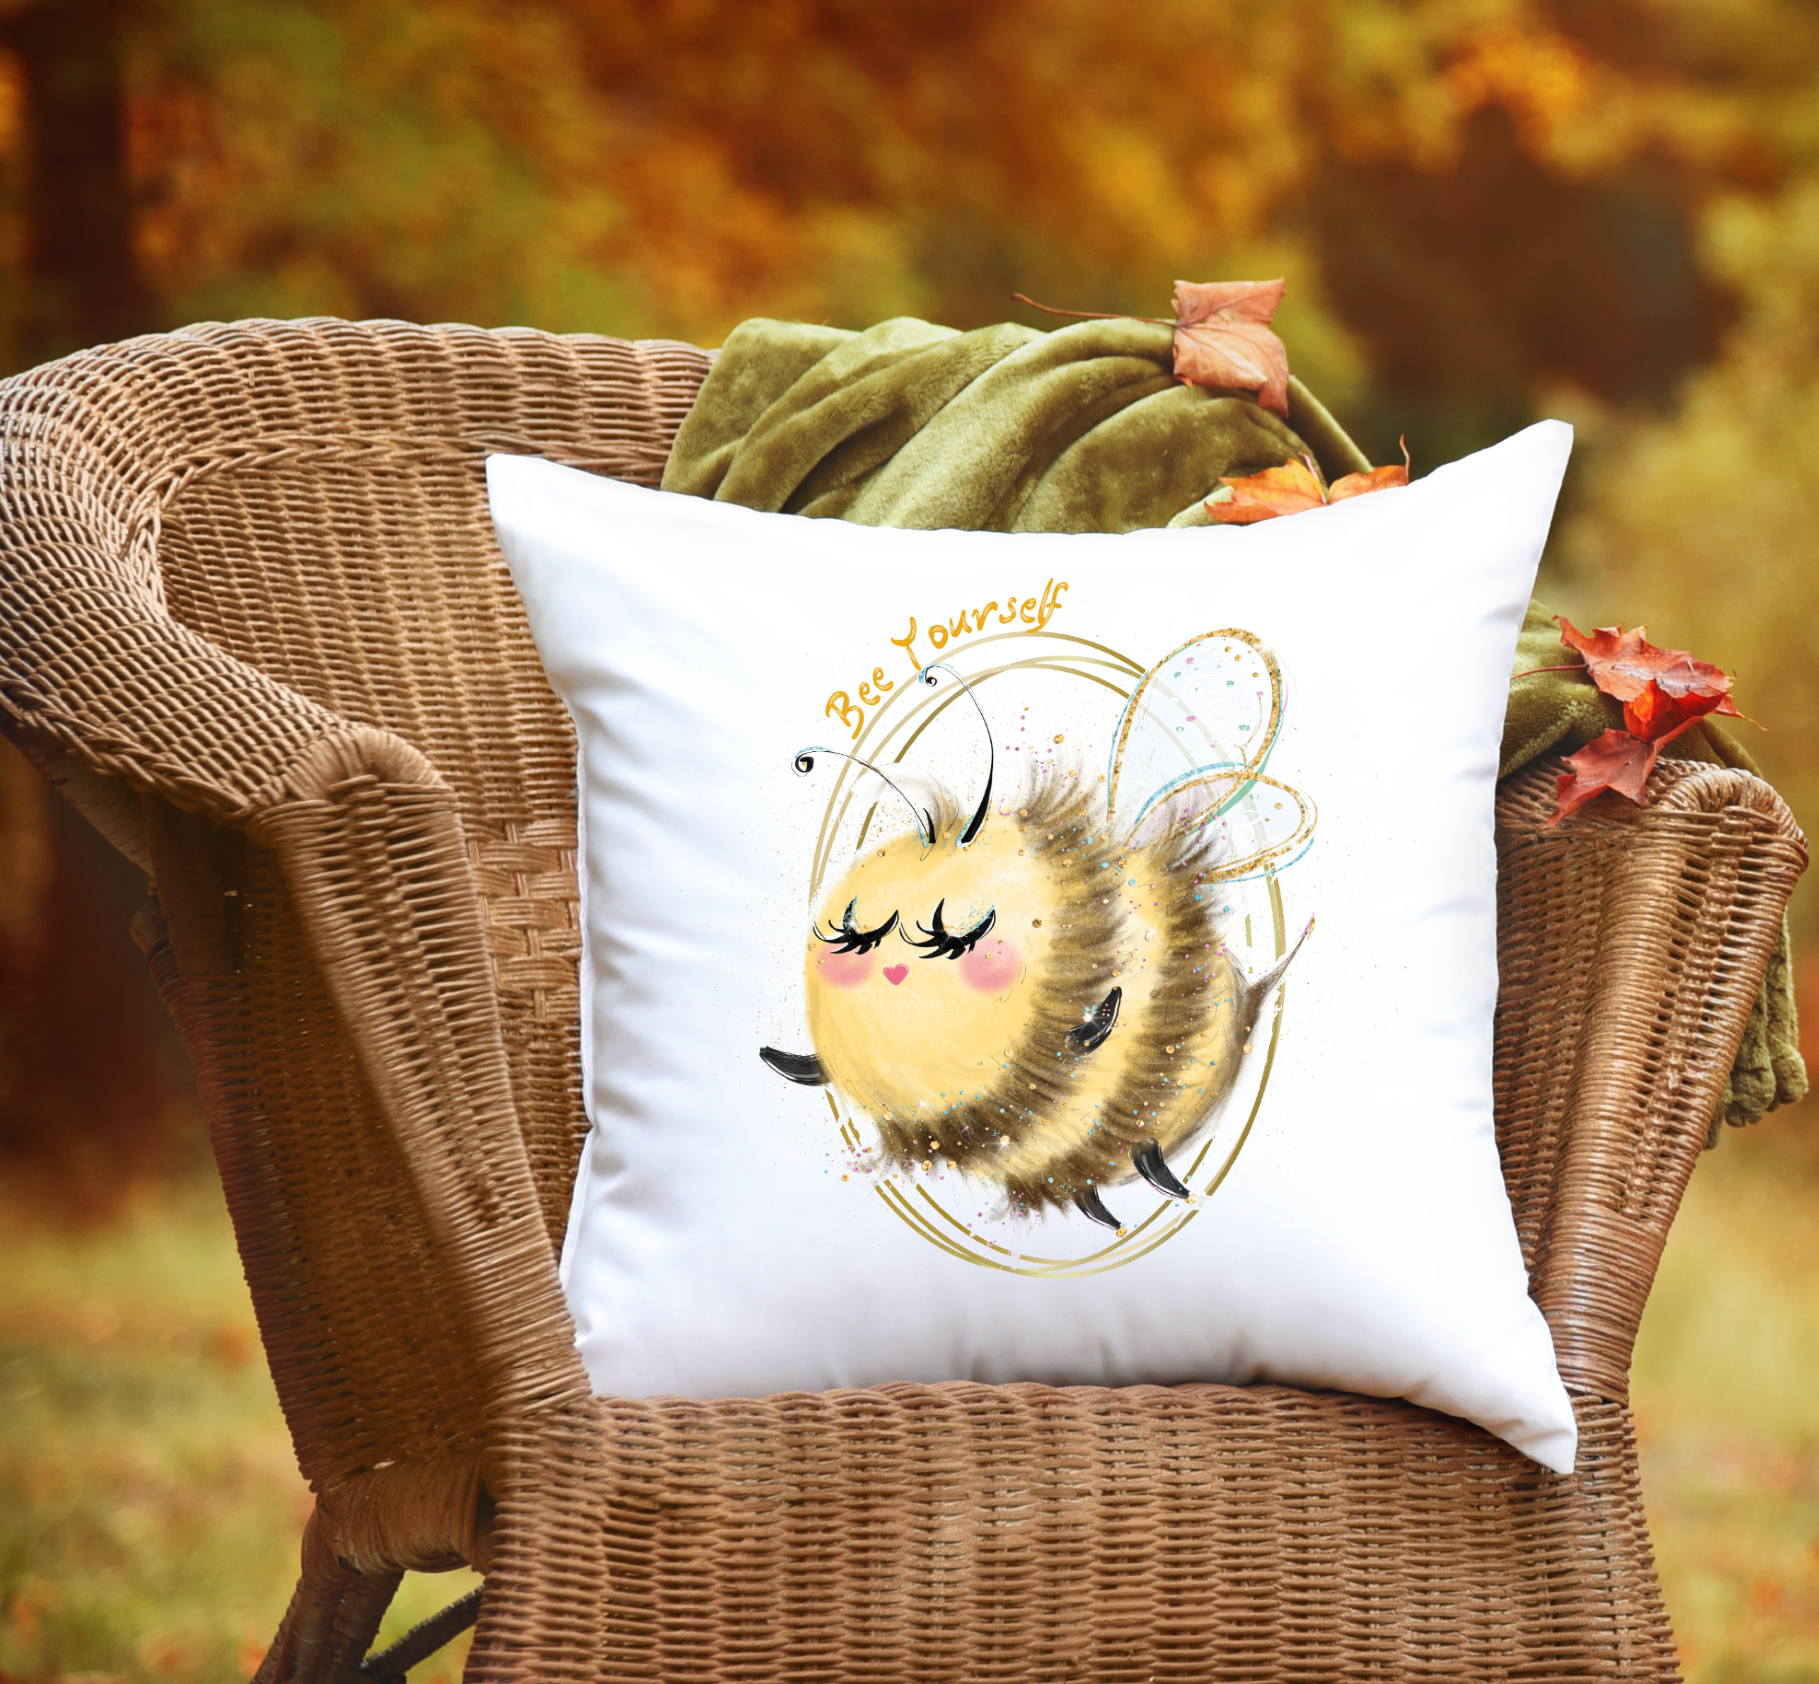 Bee Yourself Cushion,Bee Cushion,Pillow,Throw,Bee Gift,Home Decor,Home Interiors